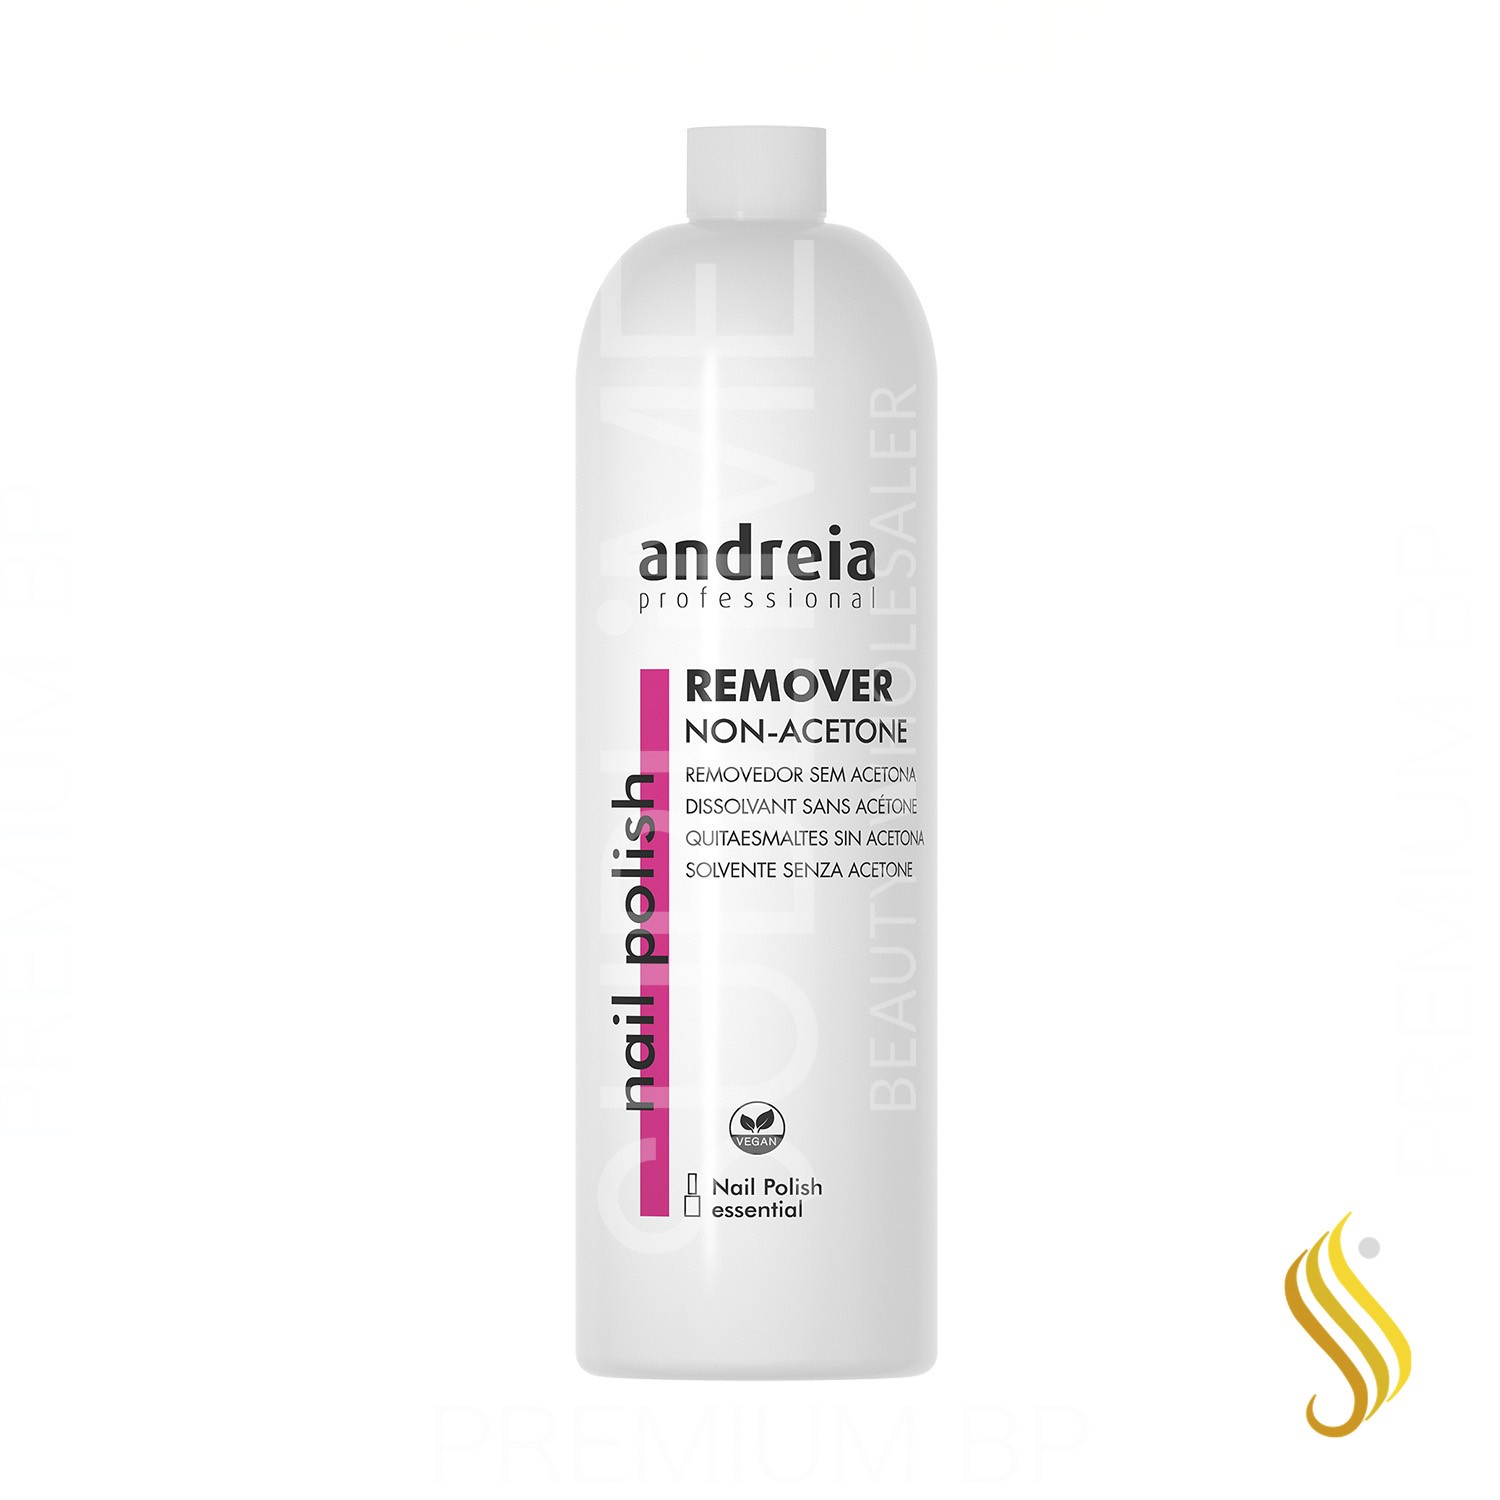 Andreia Professional Remover Non-Acetone Quitaesmalte sin Acetona 1000 ml